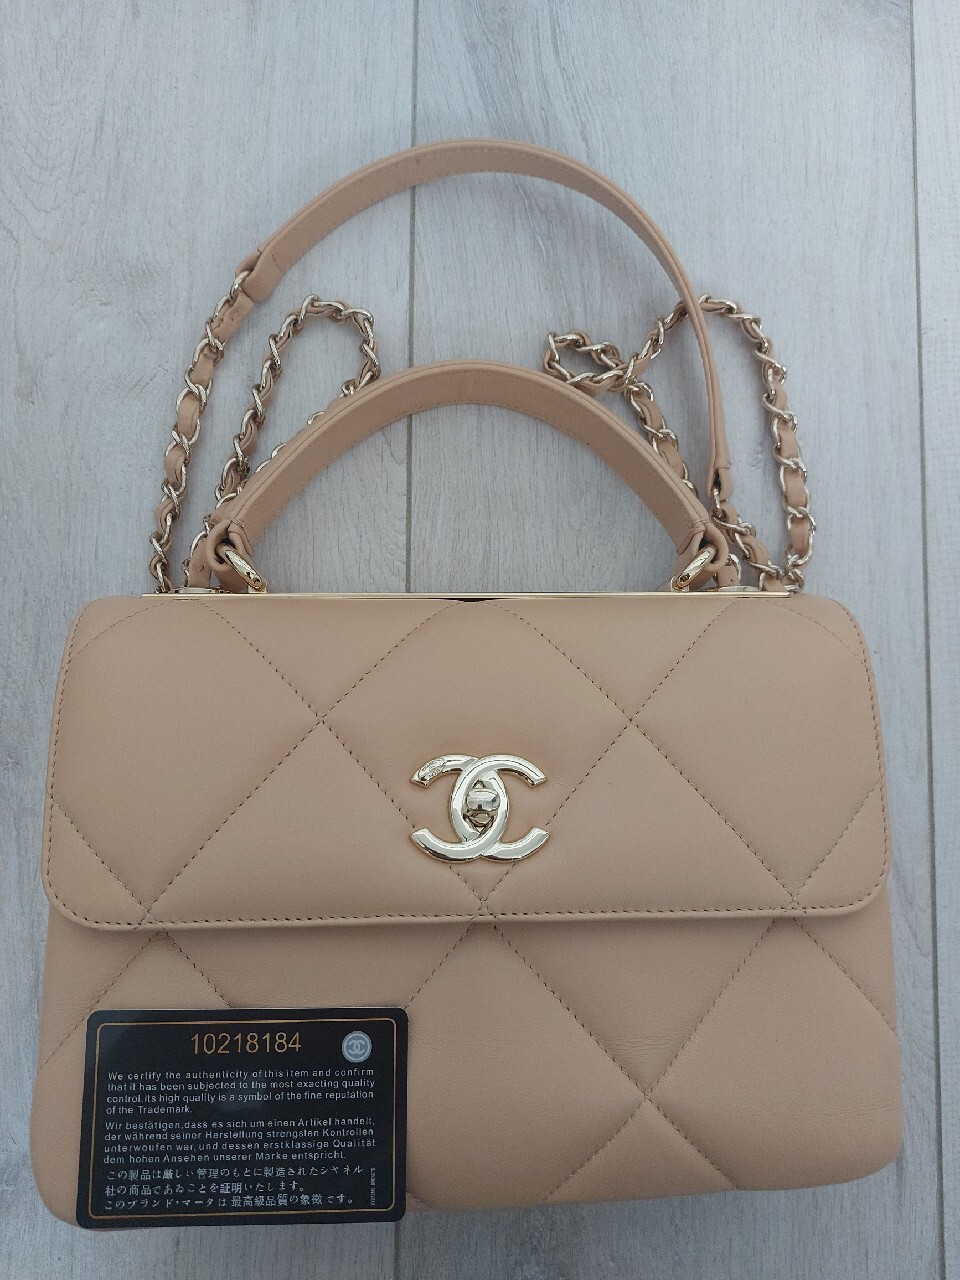 Chanel Trendy CC Flap bag